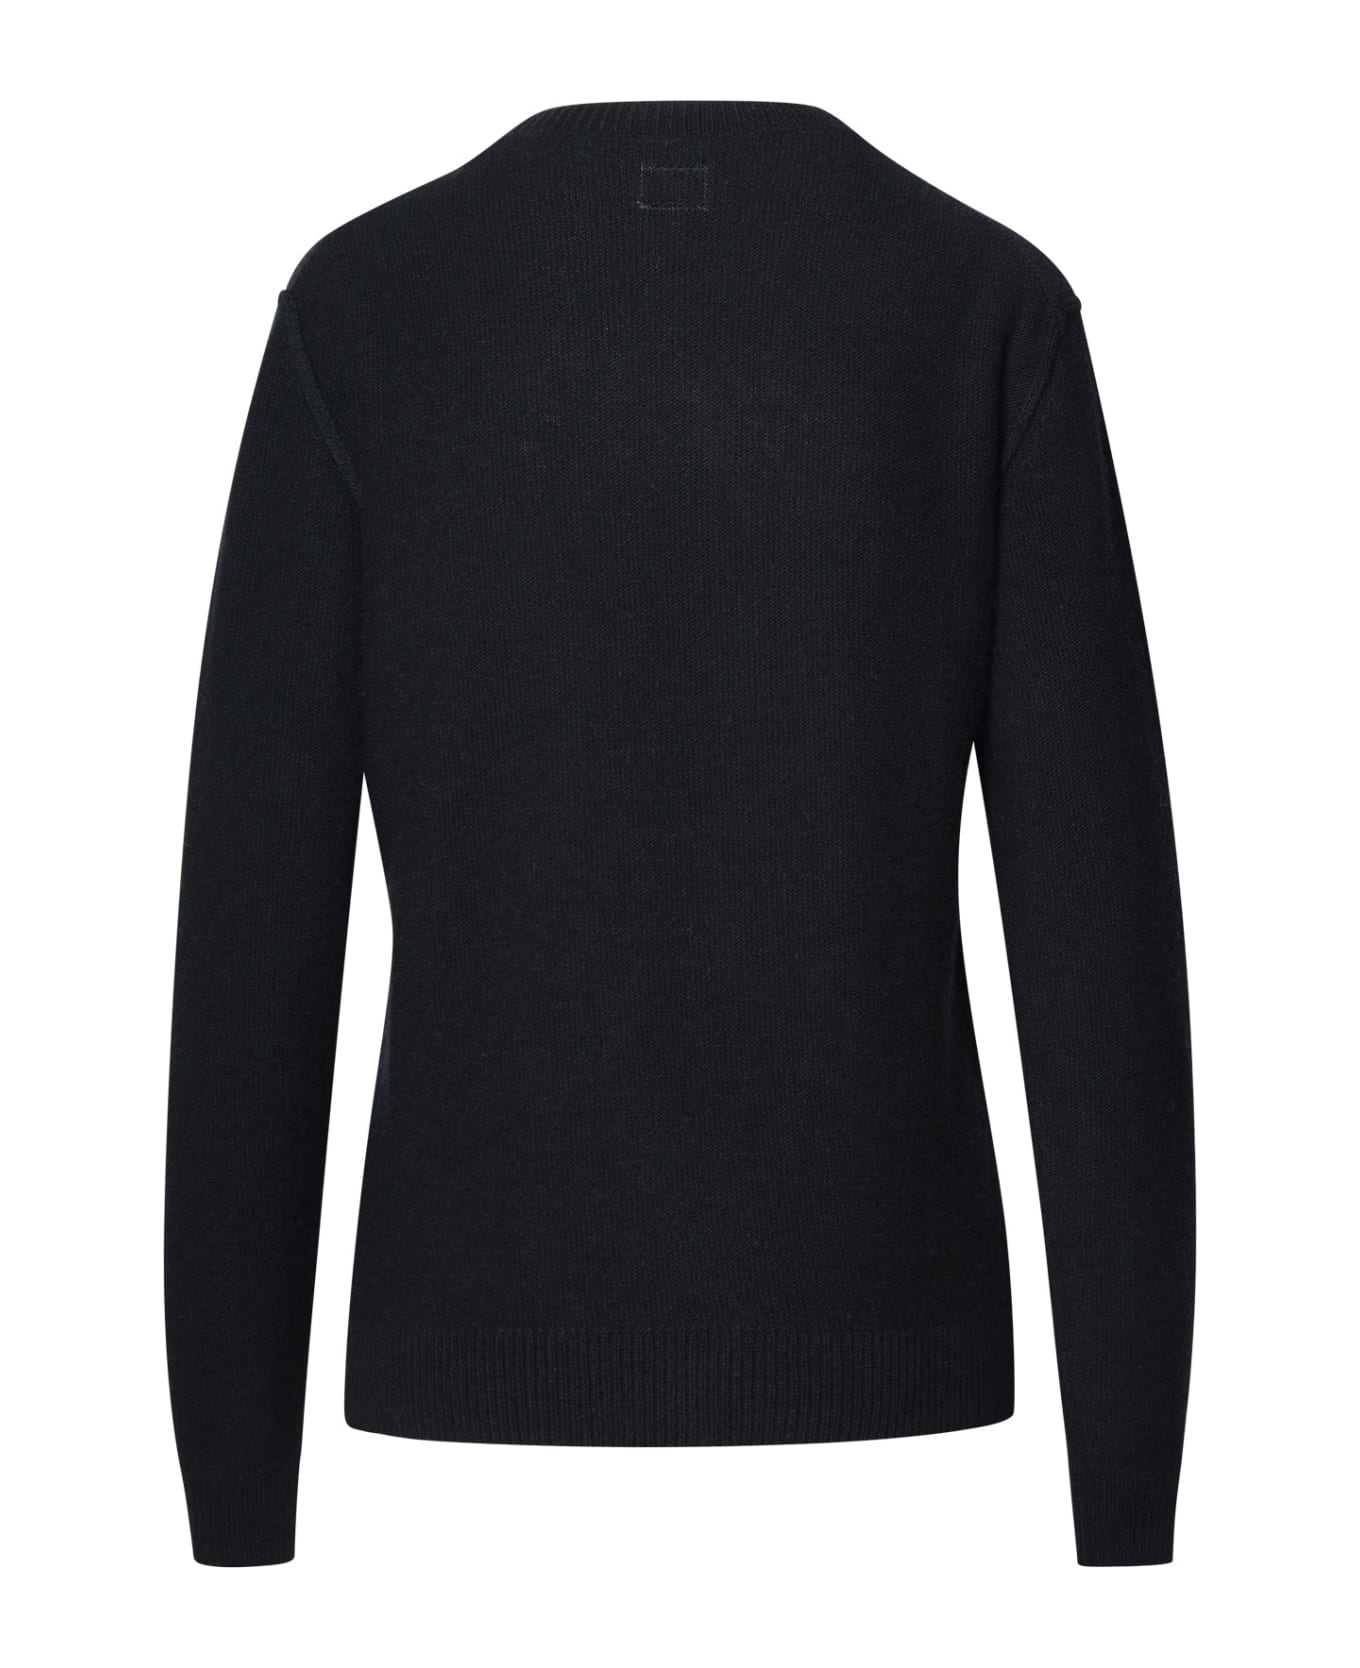 C.P. Company Black Wool Sweater - Black